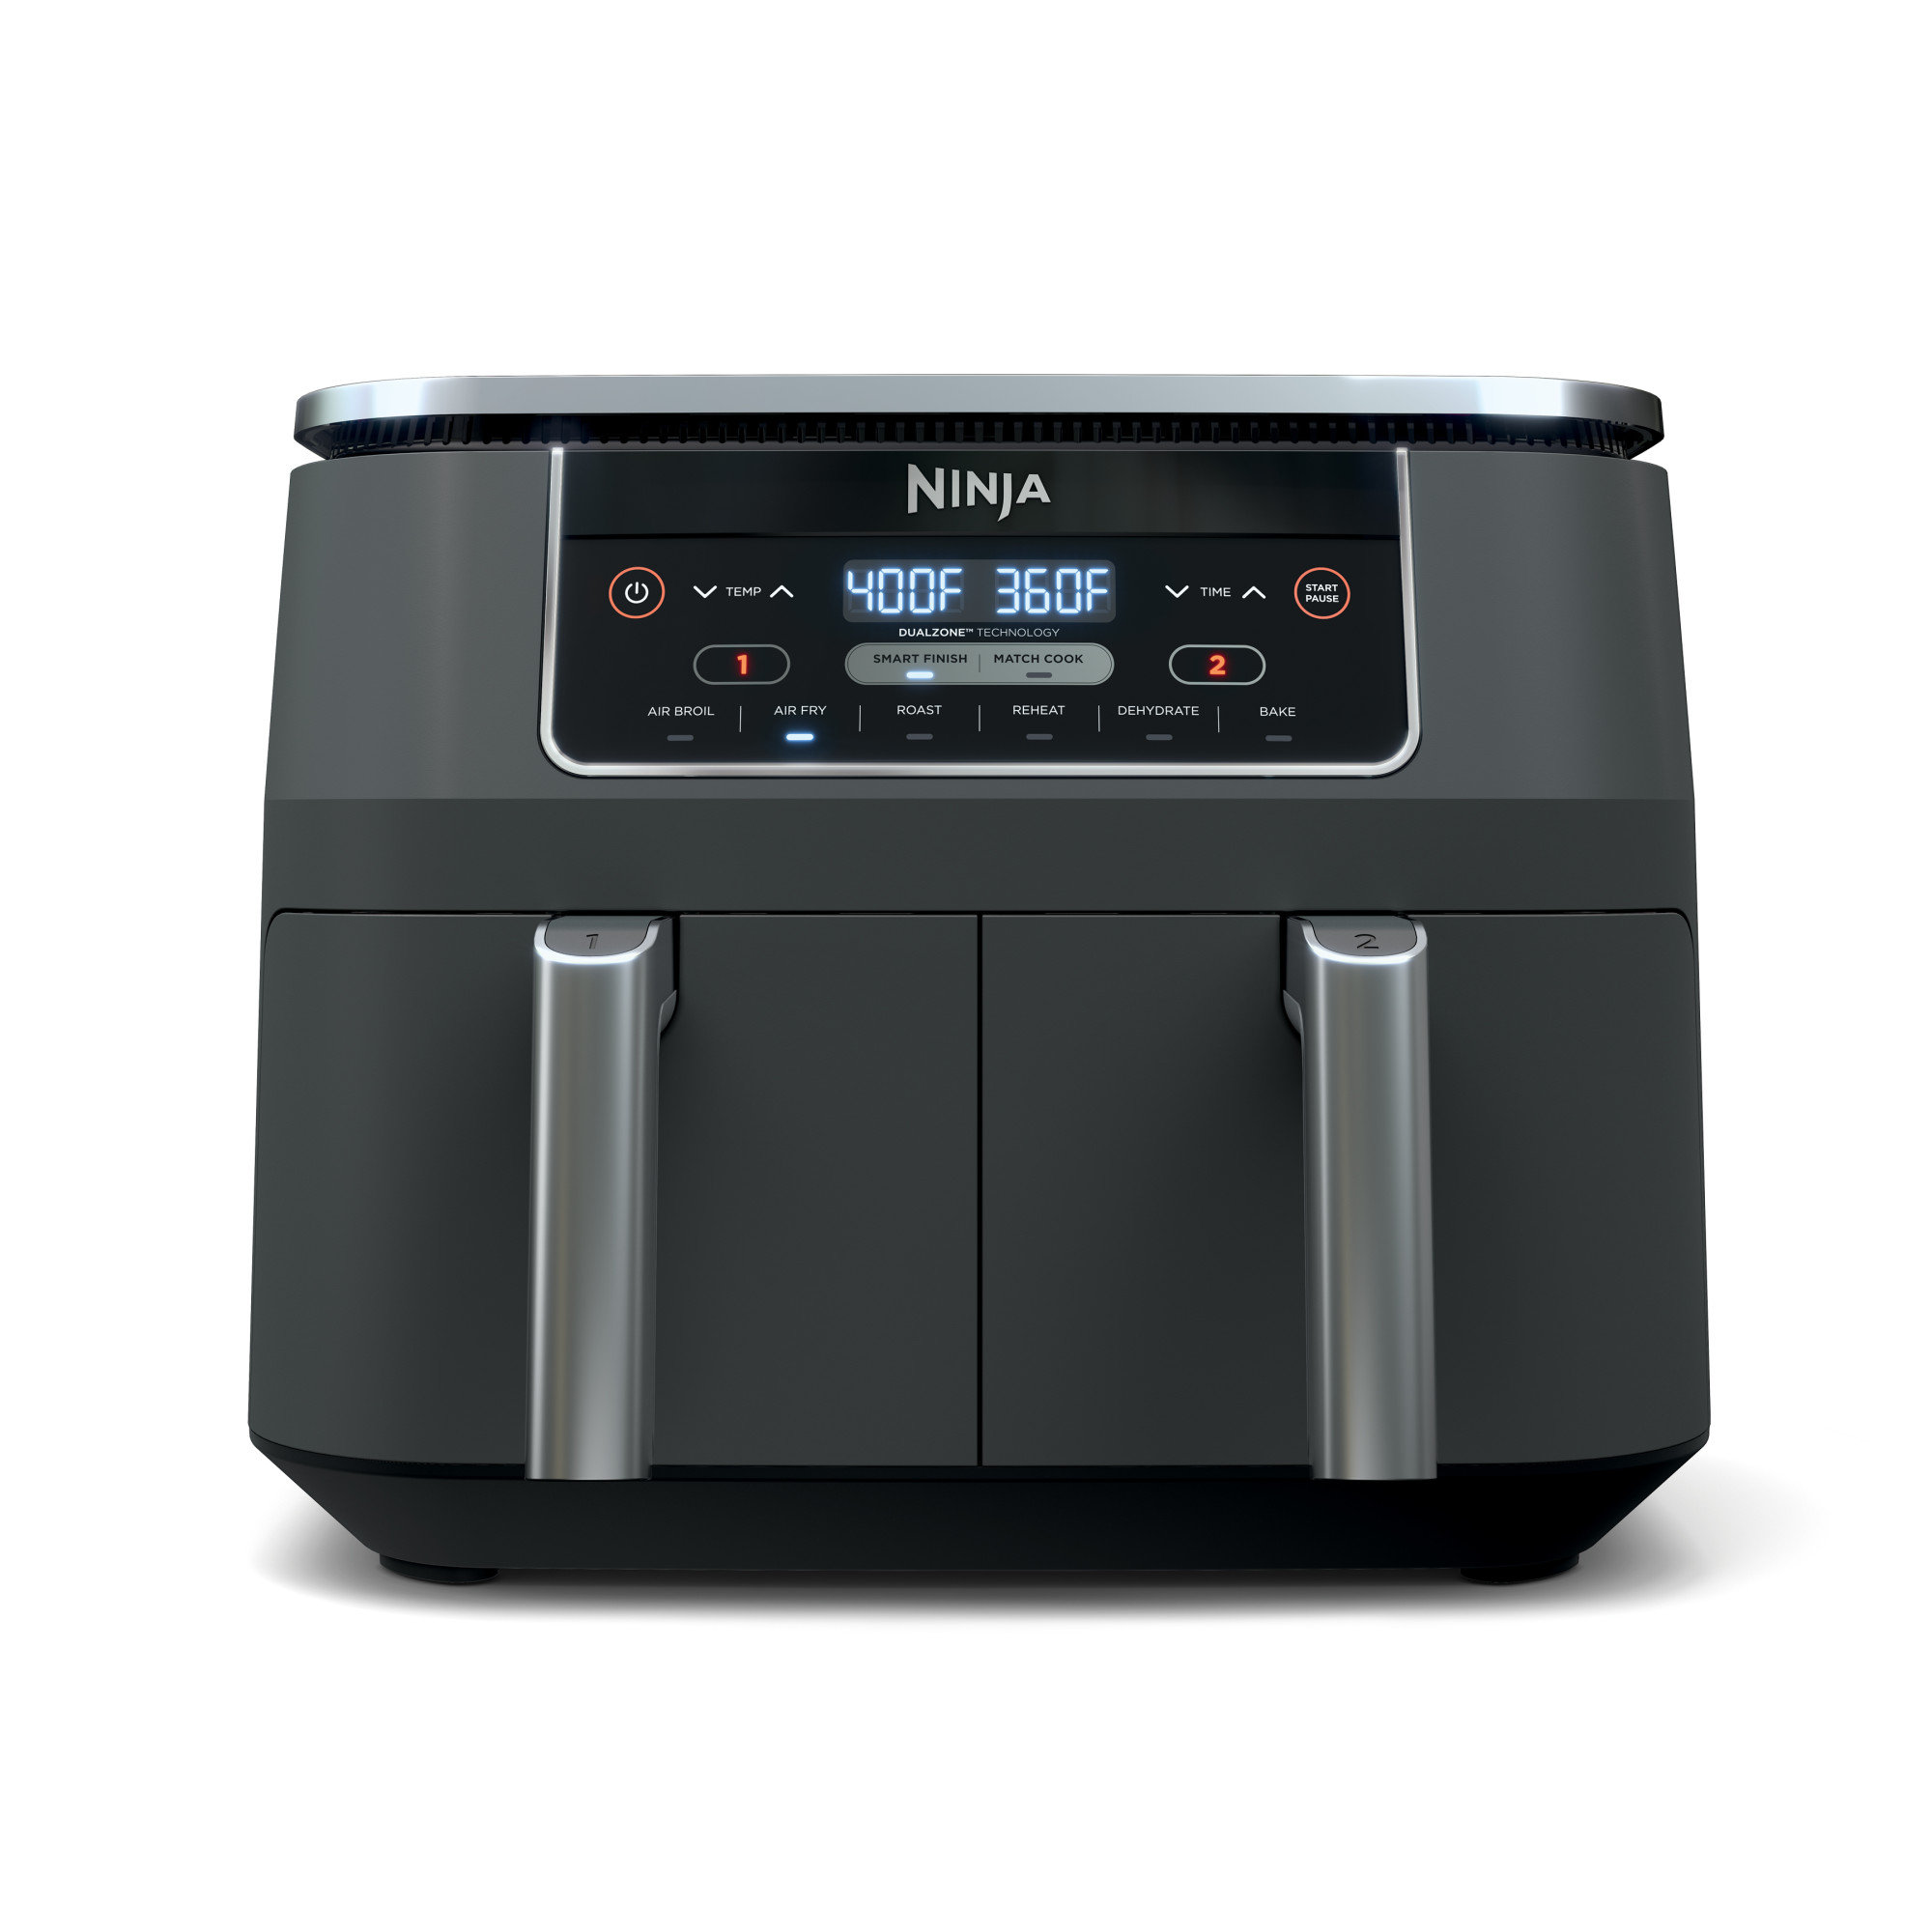 Ninja® Foodi® 6-in-1 8-qt. 2-Basket Air Fryer with DualZone™ Technology &  Reviews